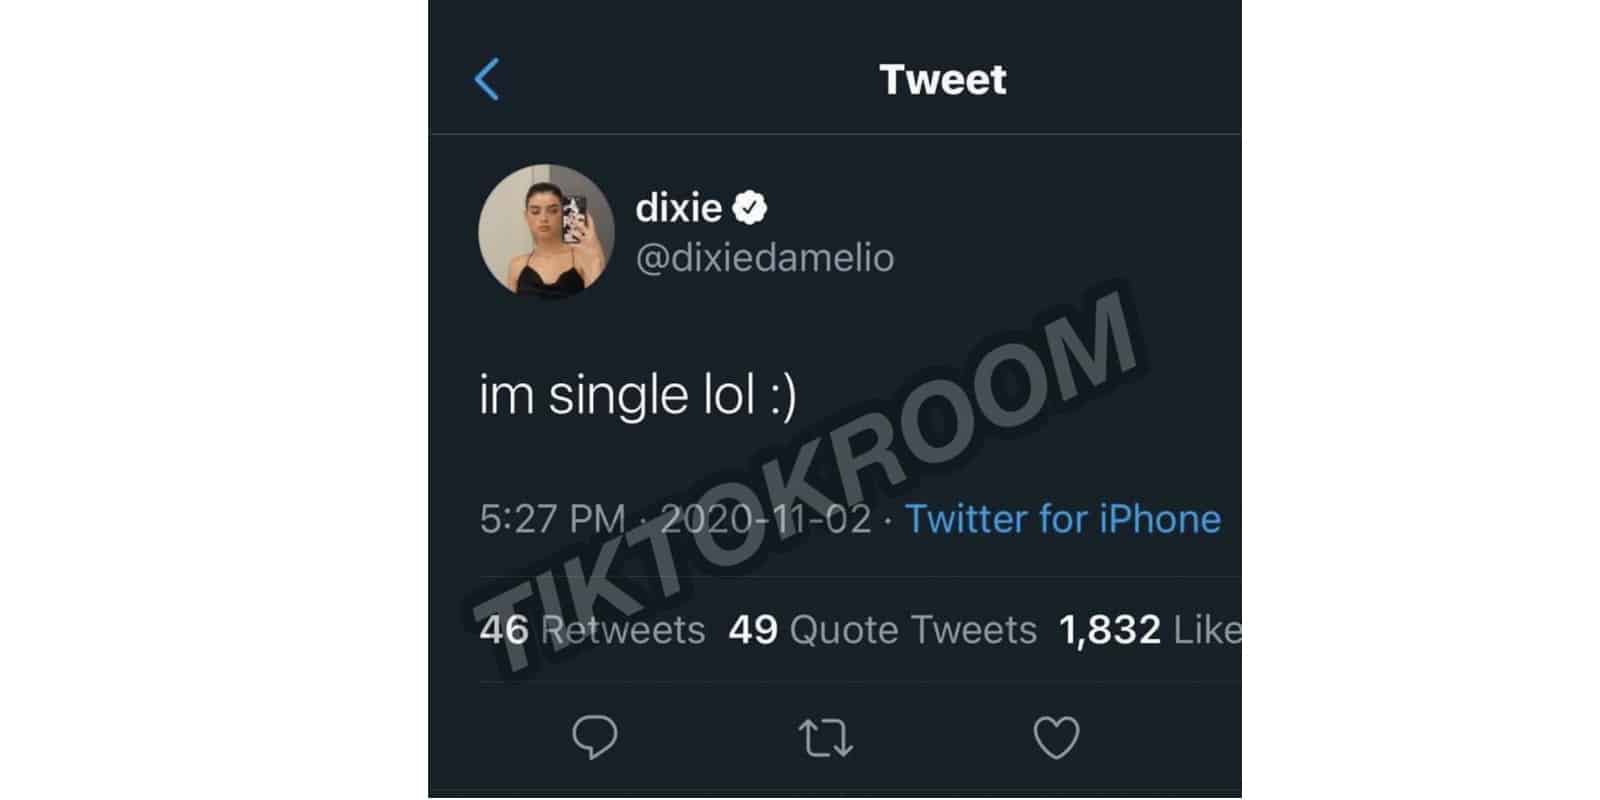 Dixie DAmelion tweets